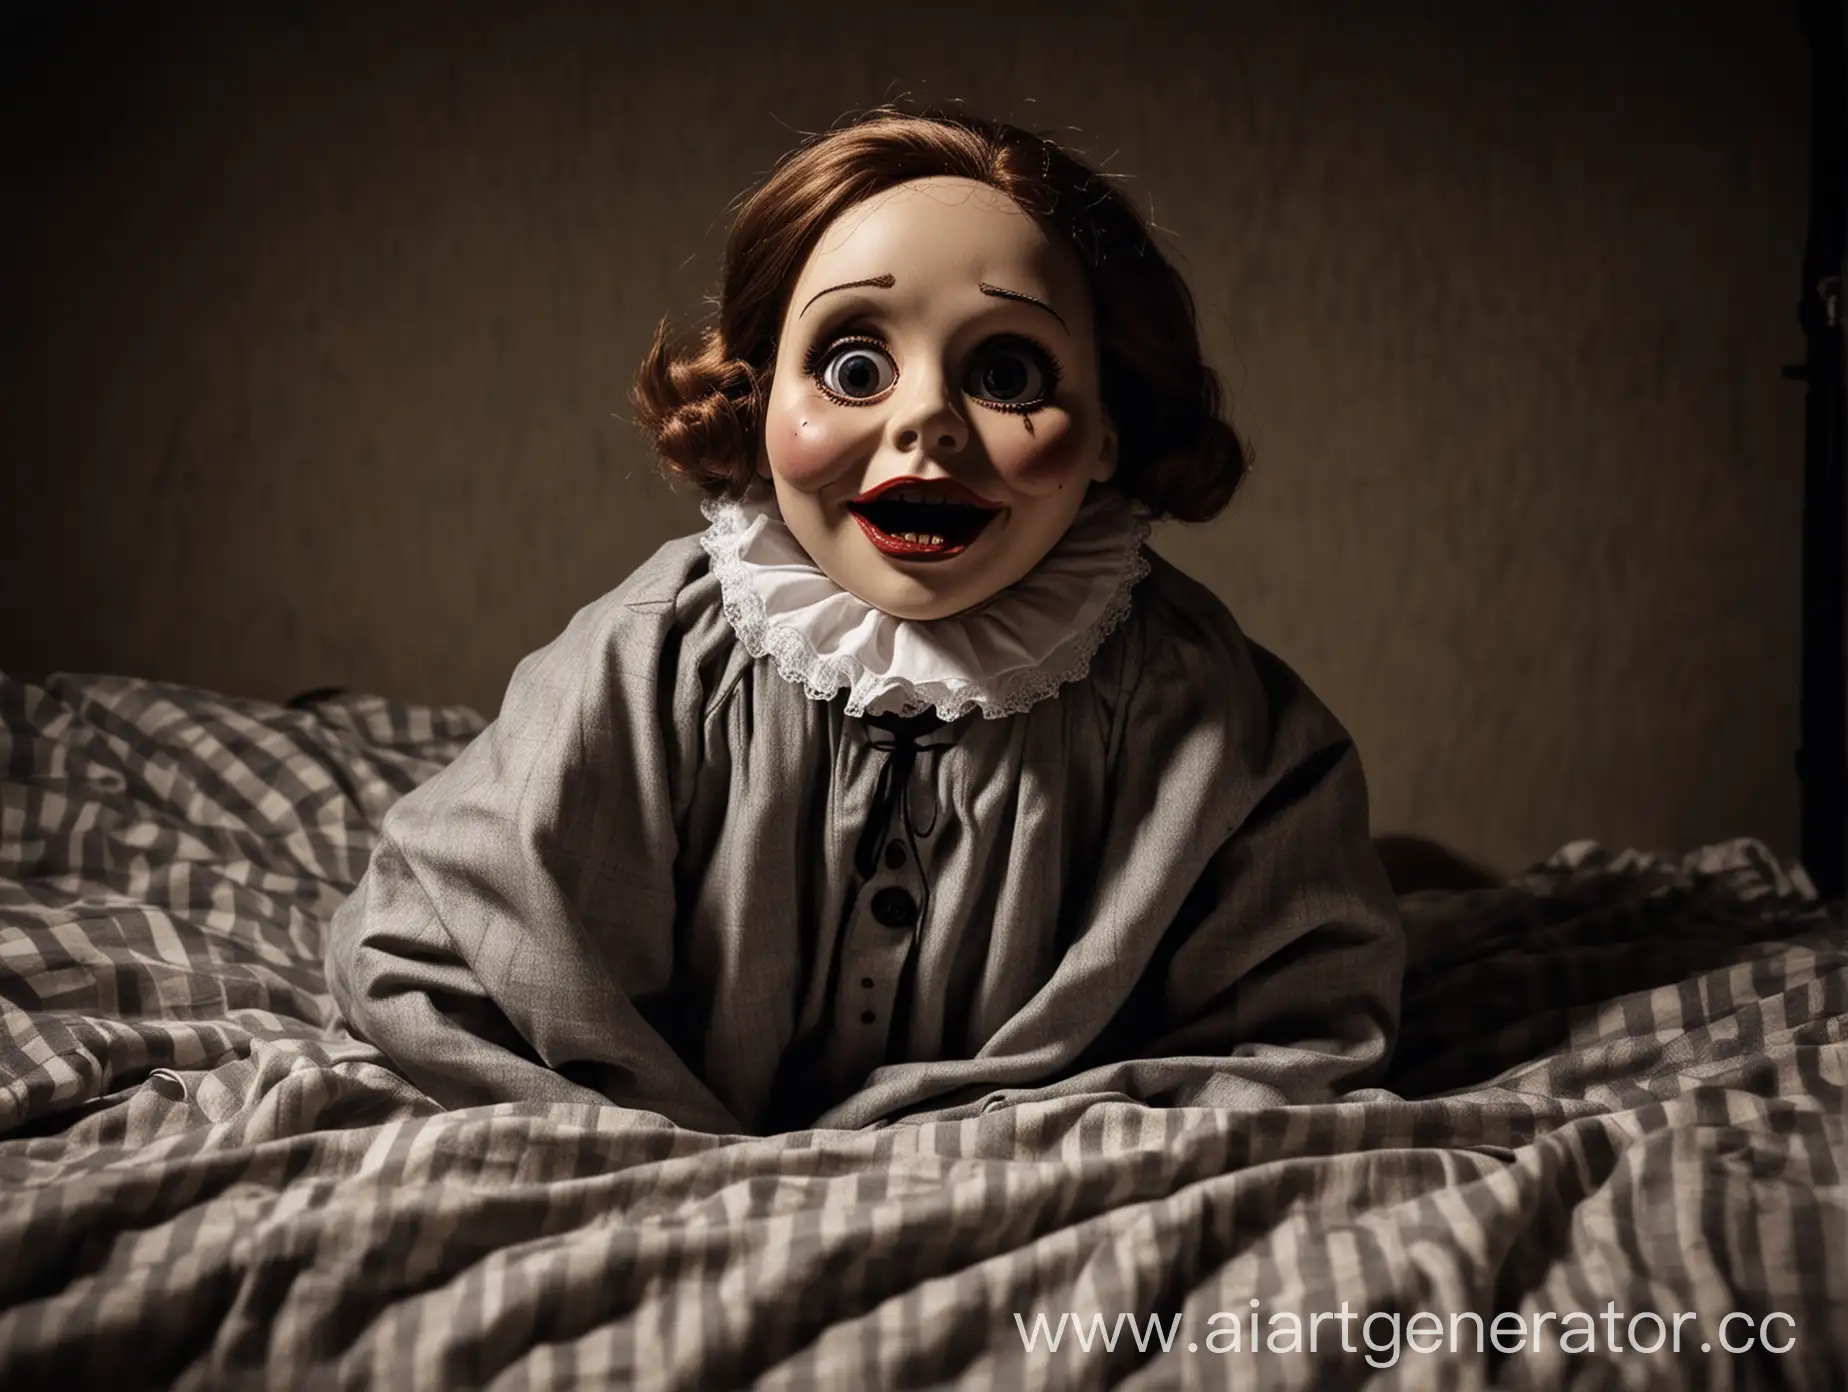 Horror-Movie-Style-20th-Century-Ventriloquist-Doll-Superhero